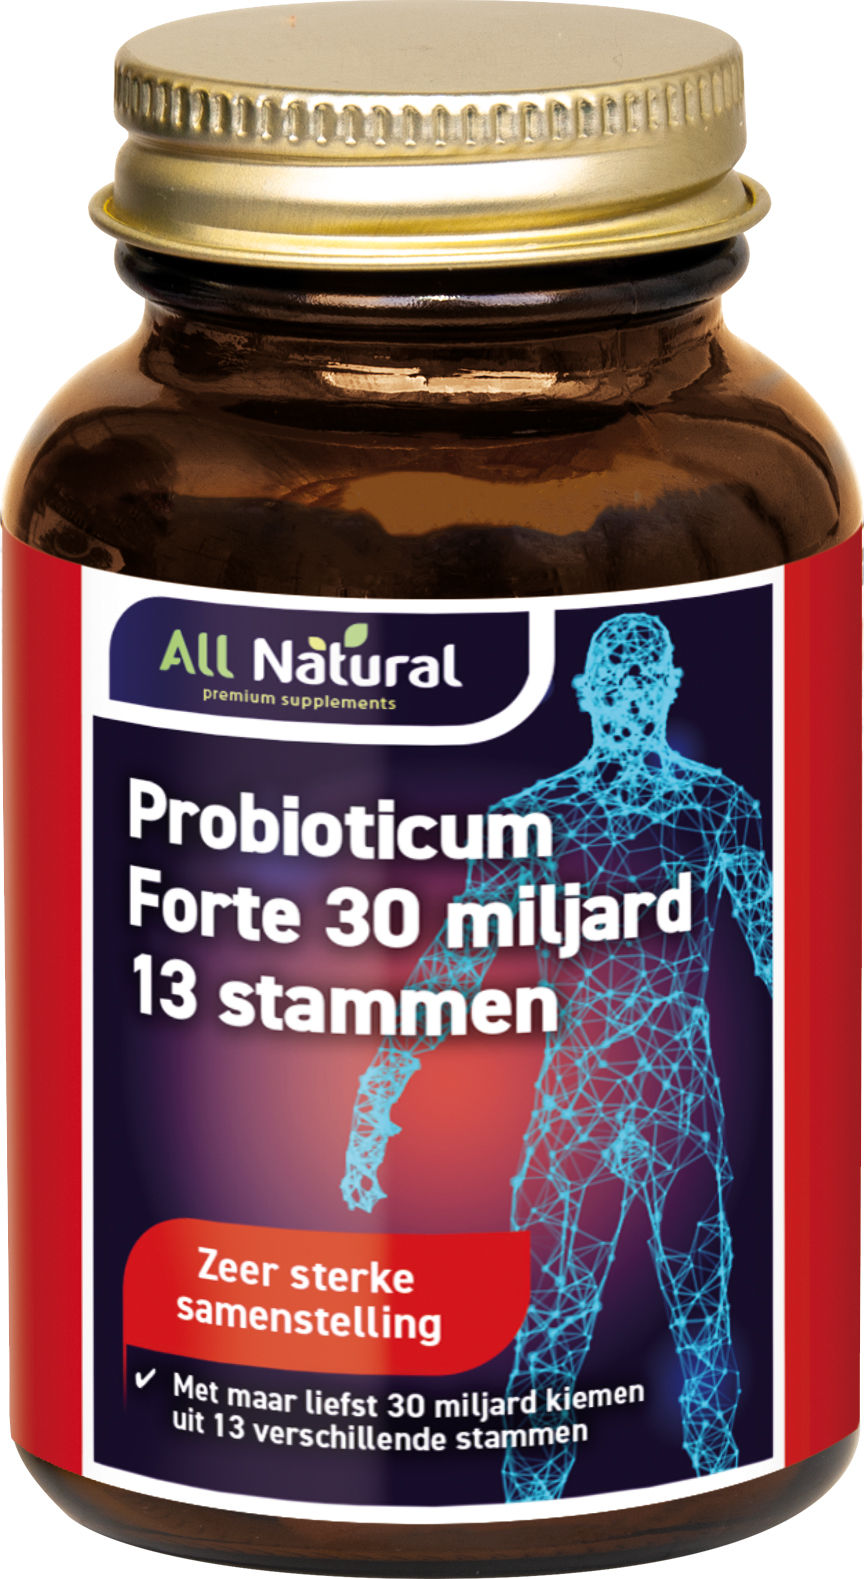 All Natural Probioticum Forte 30 miljard 13 stammen Capsules kopen